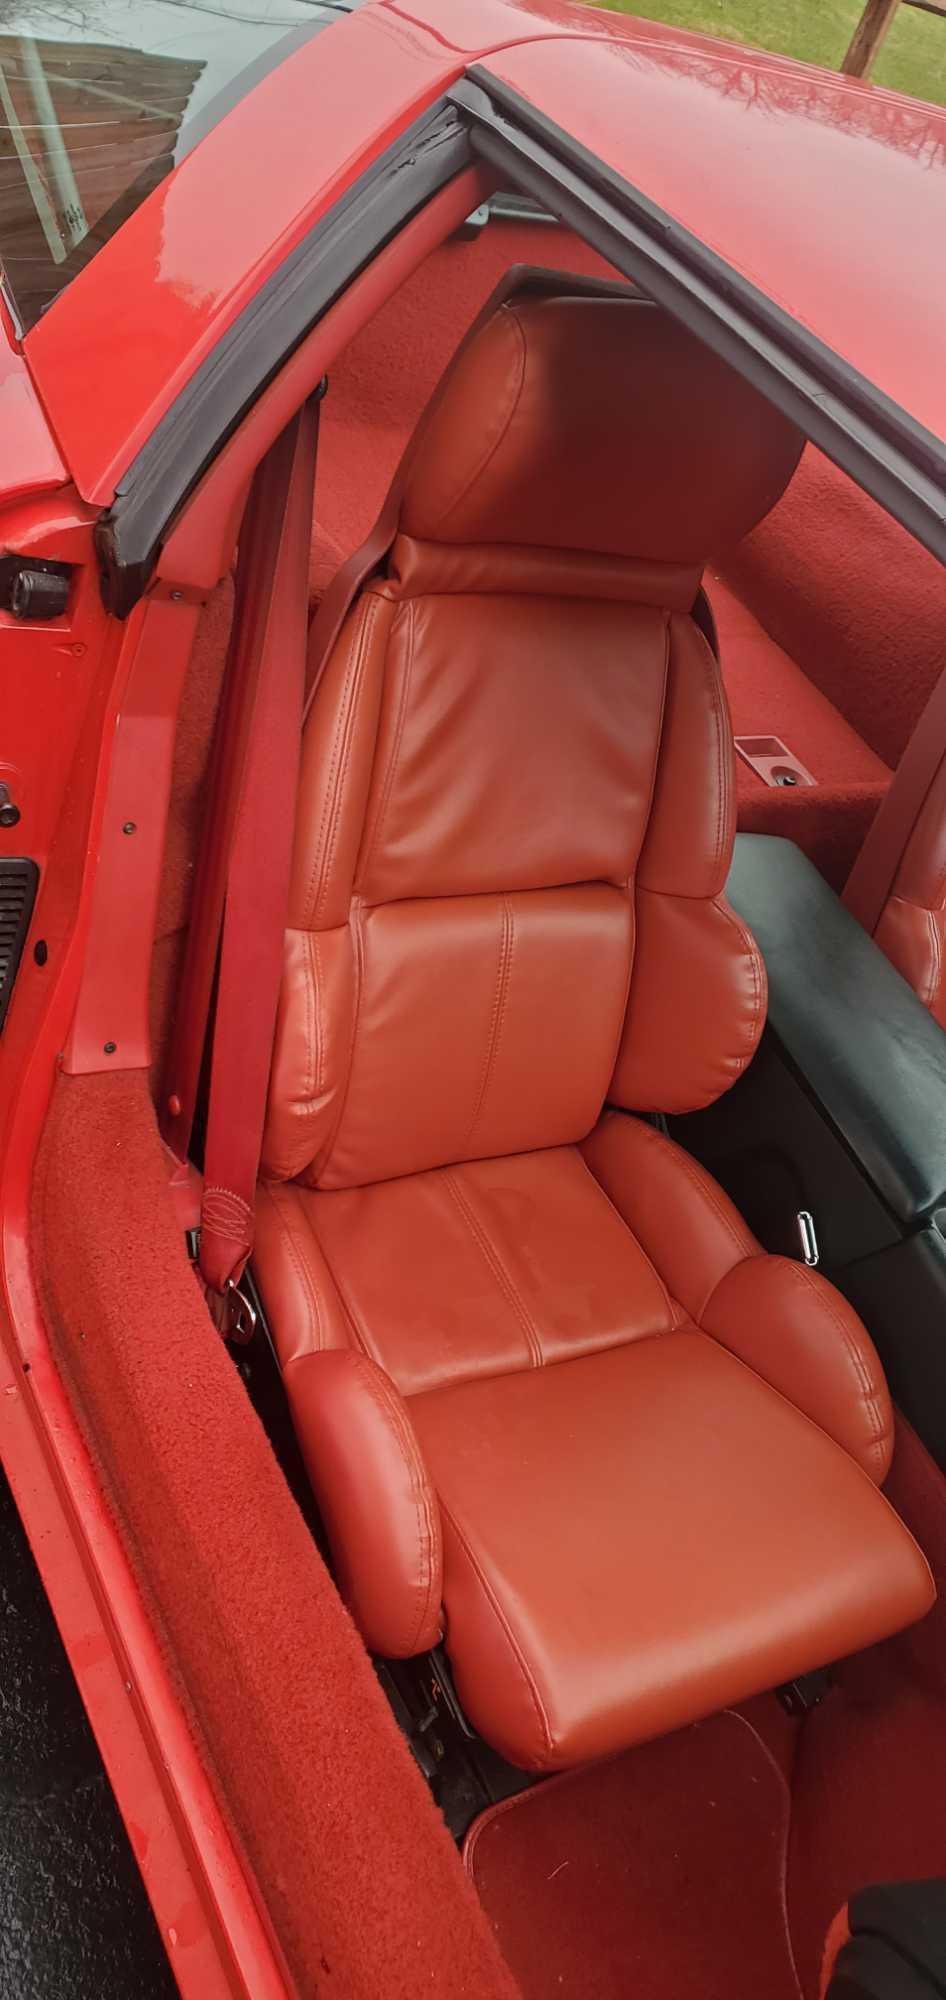 1991 Red Corvette CVT with Targa Top